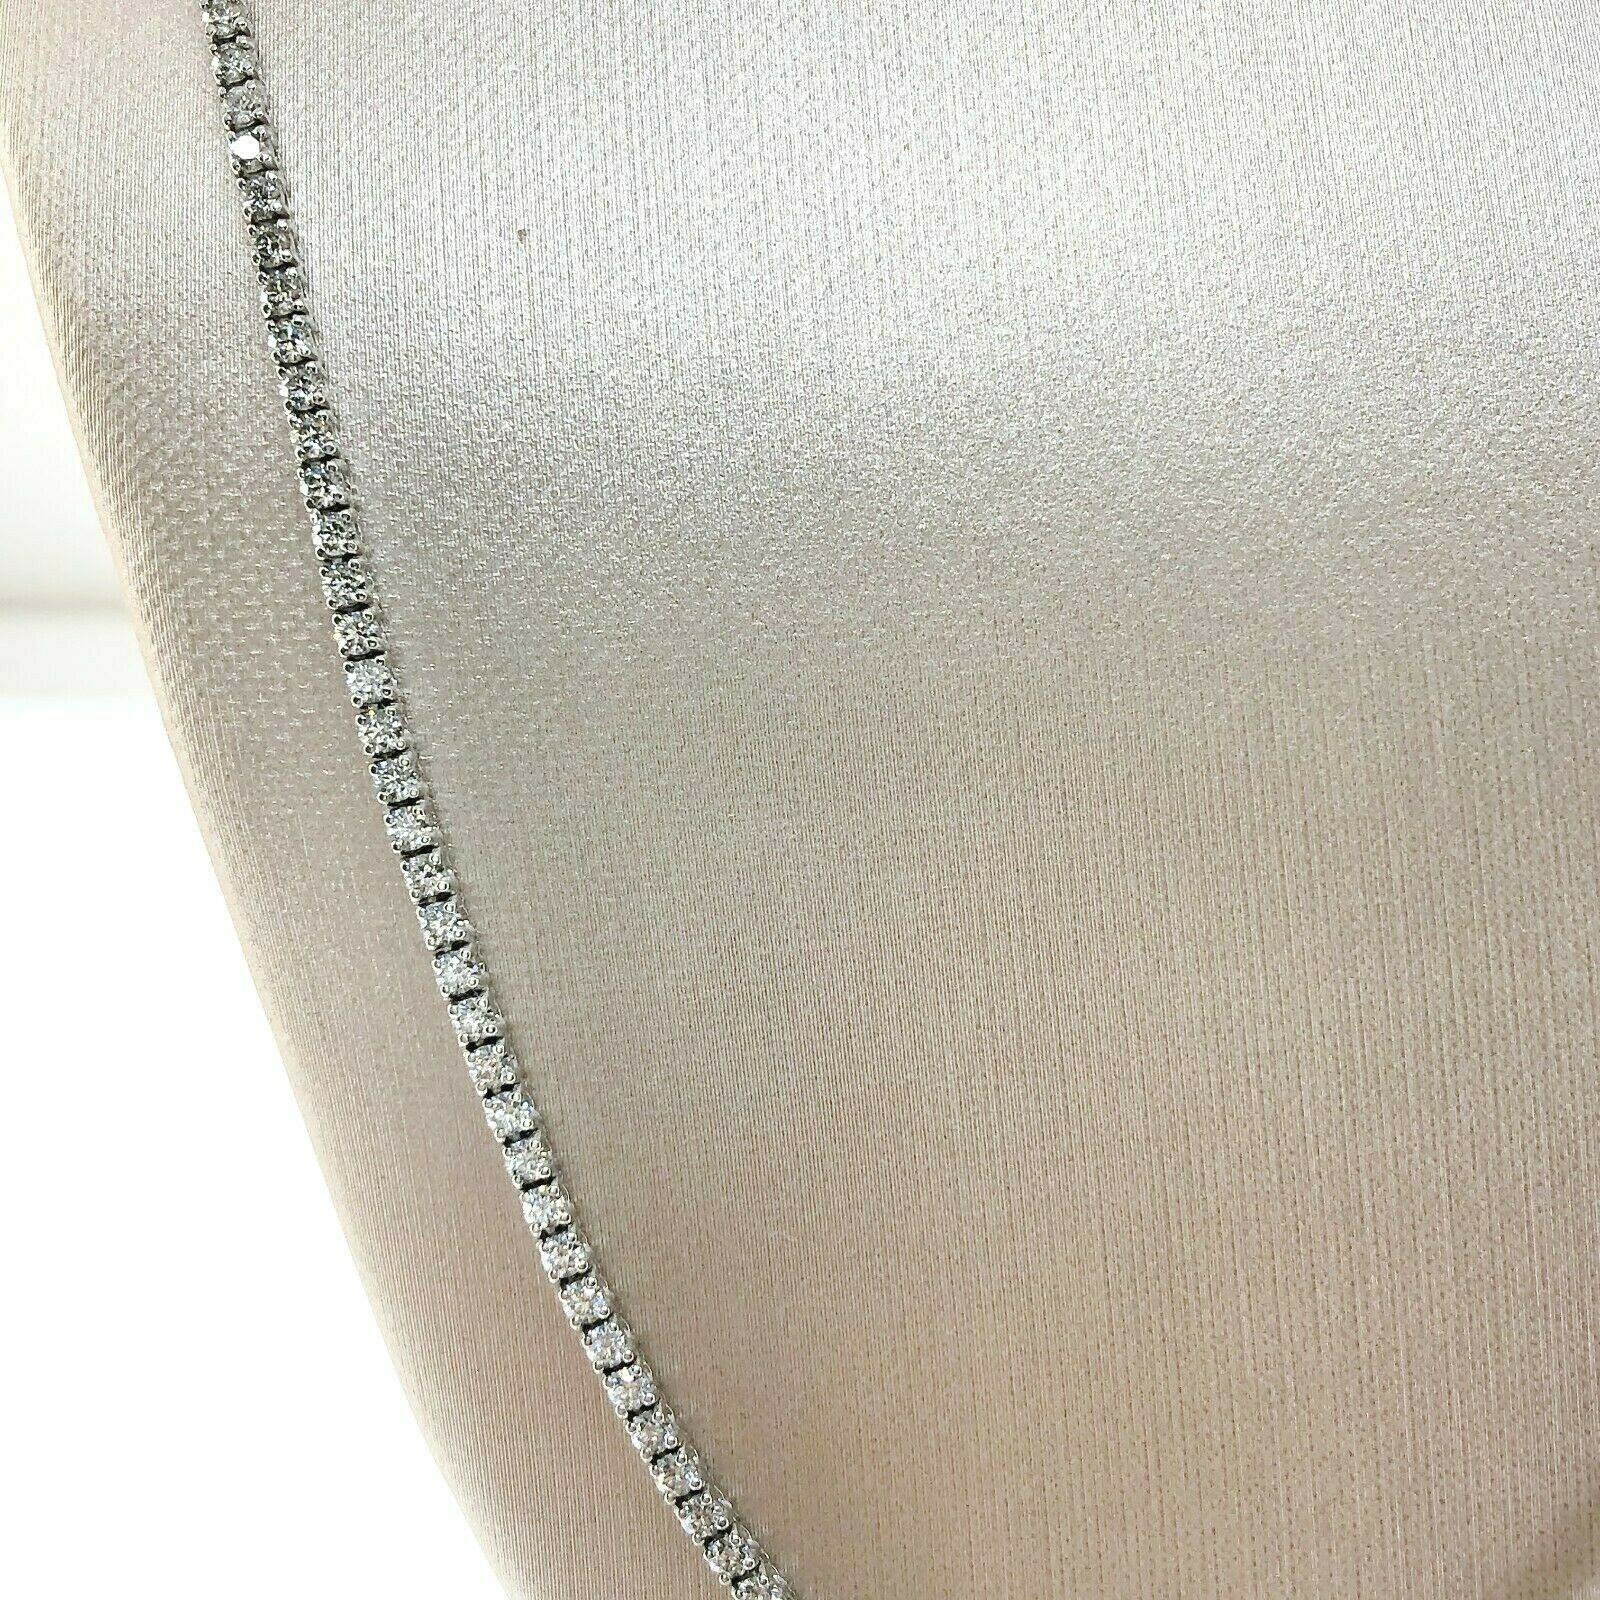 Custom Made 4.75 Carats Round Diamond Tennis Eternity Necklace 18K White Gold